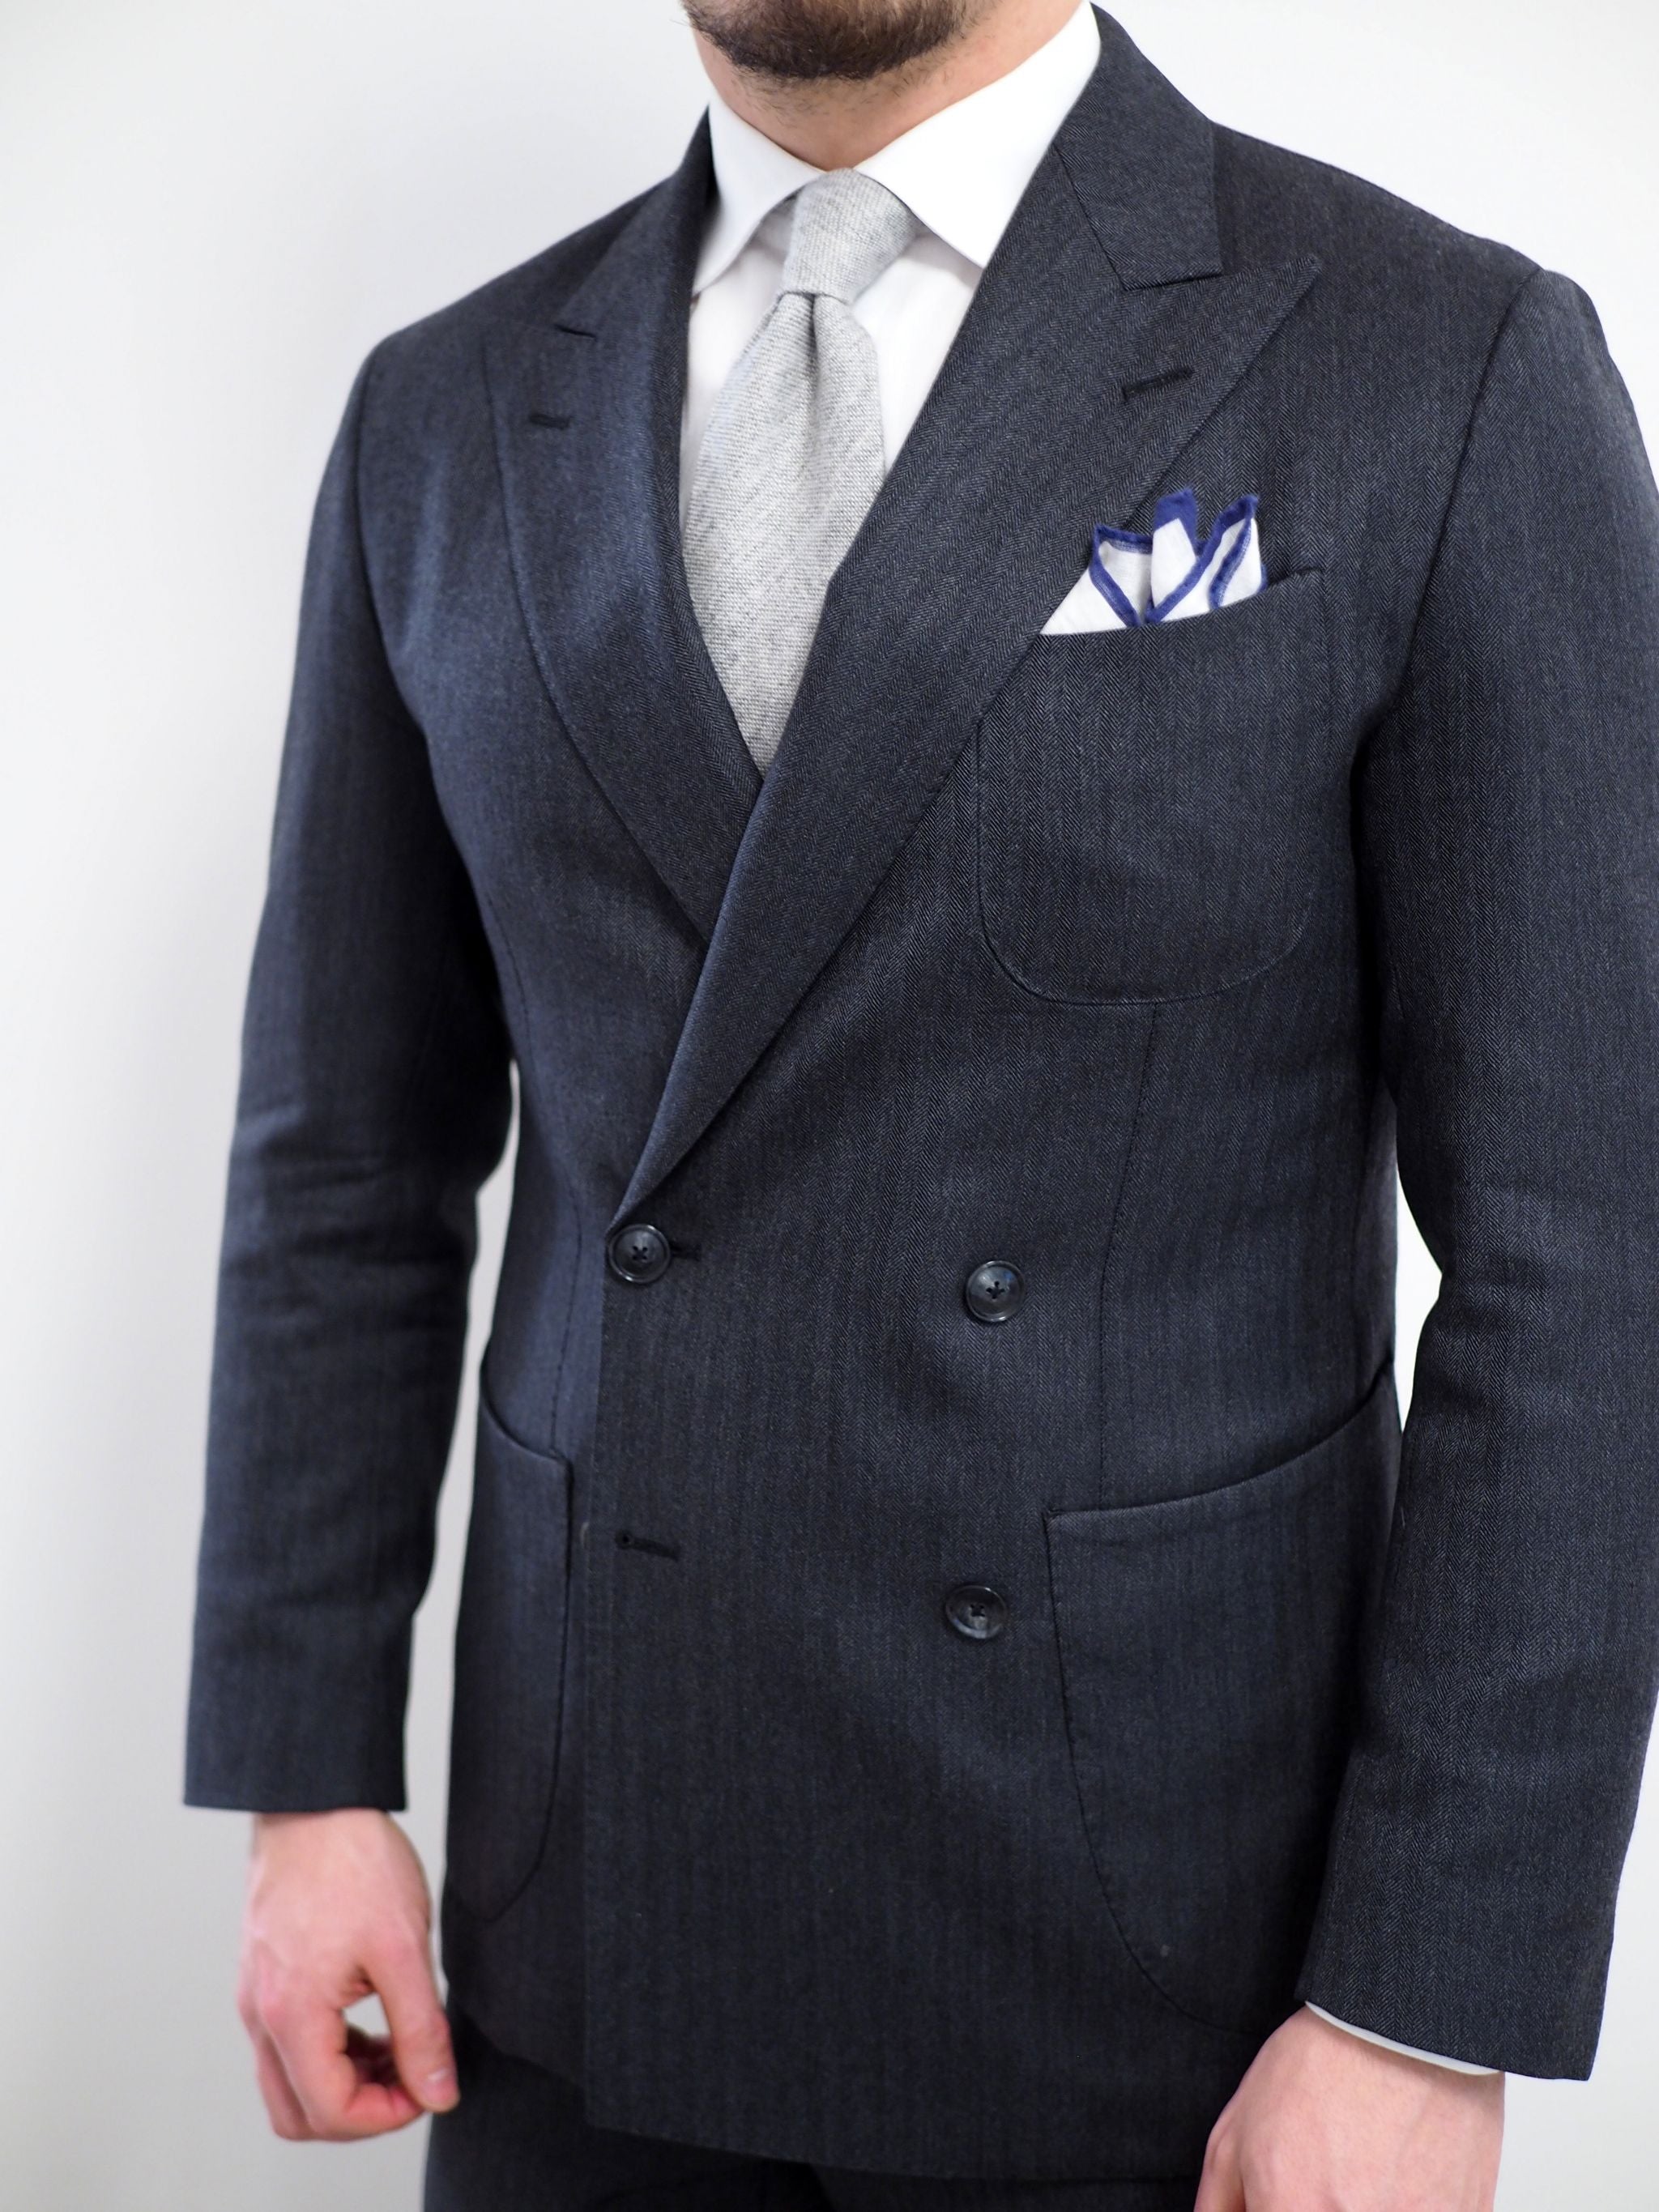 Gray cashmere tie - perfect for fall and winter - DressLikeA.com ...